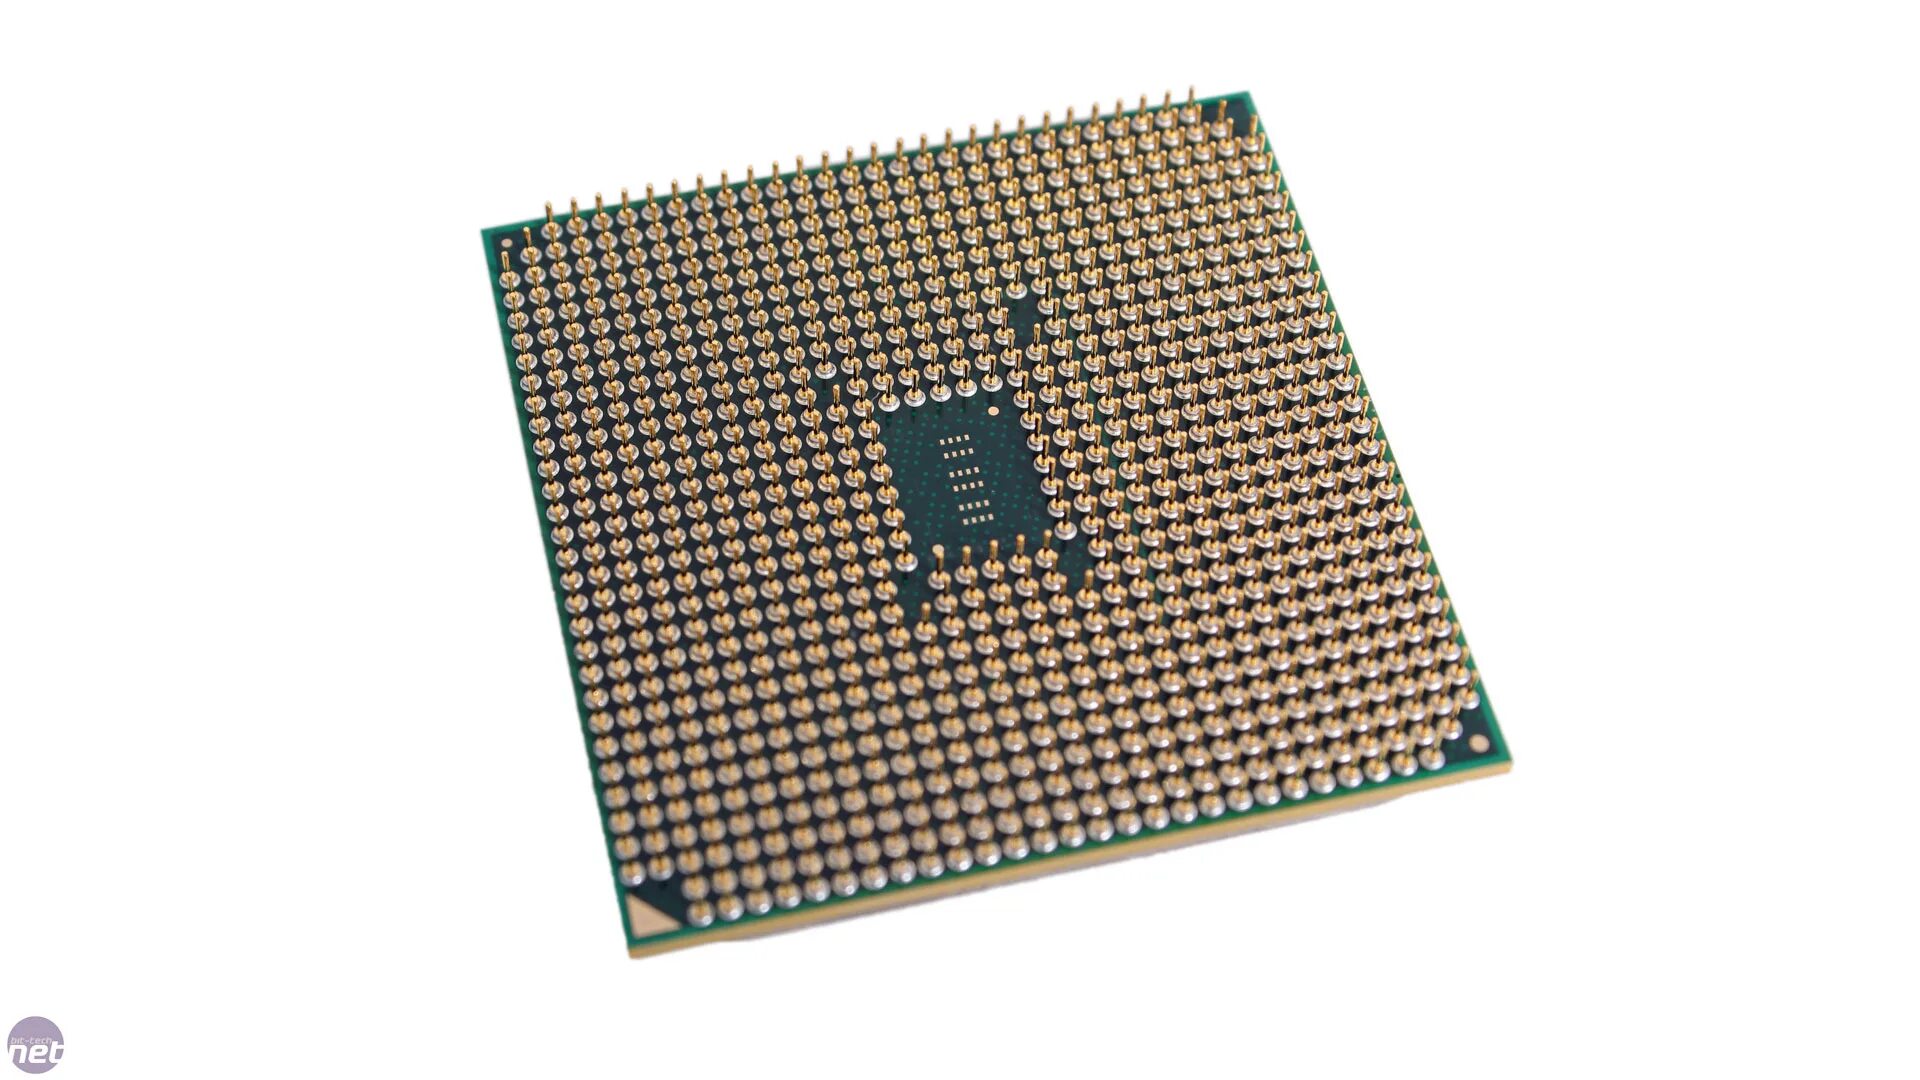 AMD a8-7600 (3.1 ГГЦ). Fcbga559 сокет. Fcbga1296 сокет. A8 3500m сокет. Amd a8 сокет